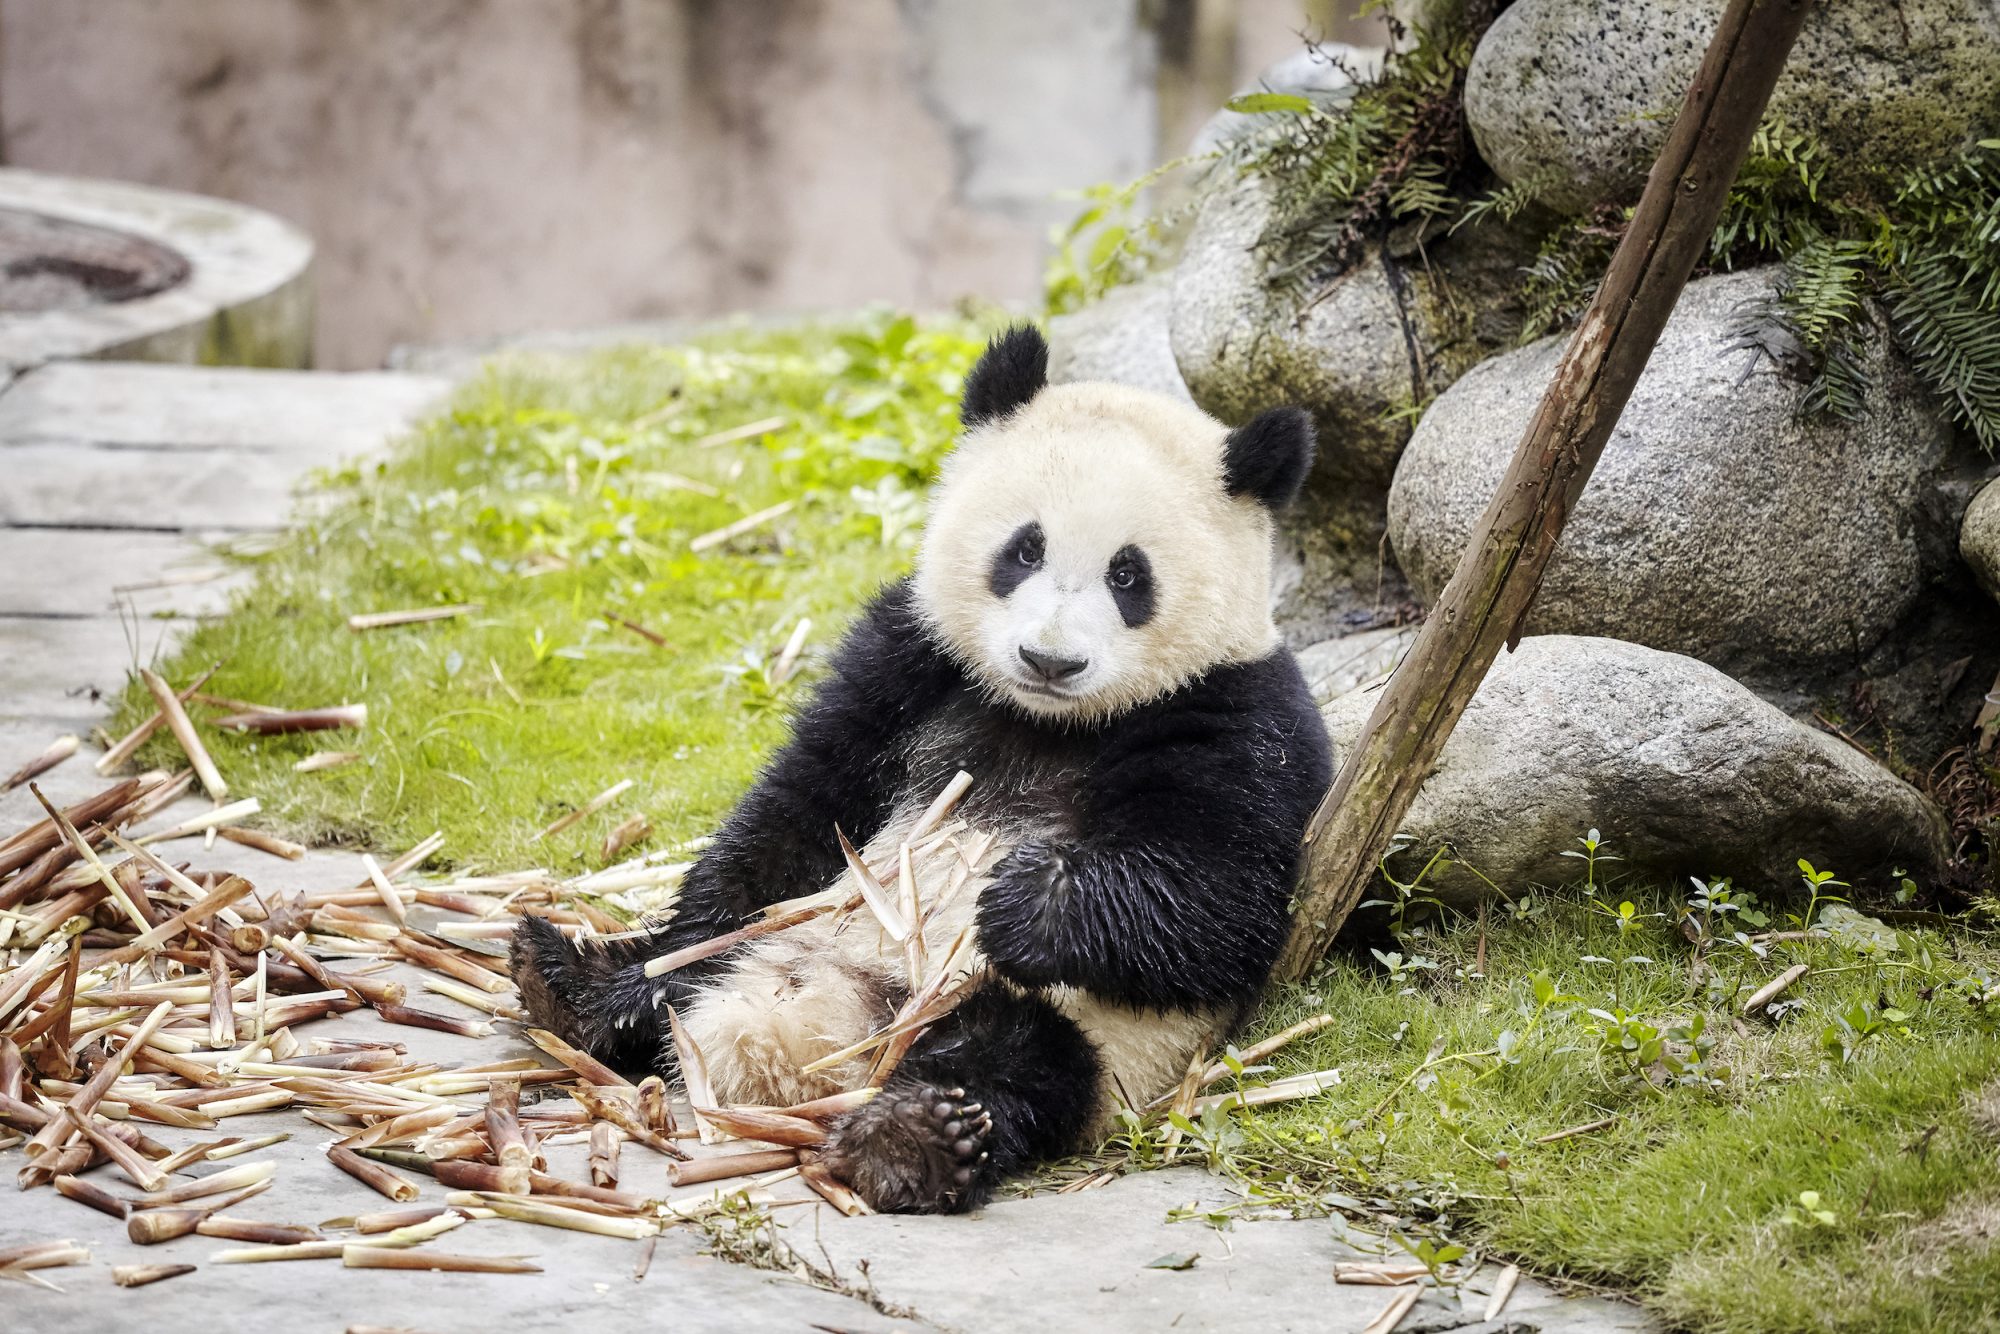 120,000 Visitors to Panda Park